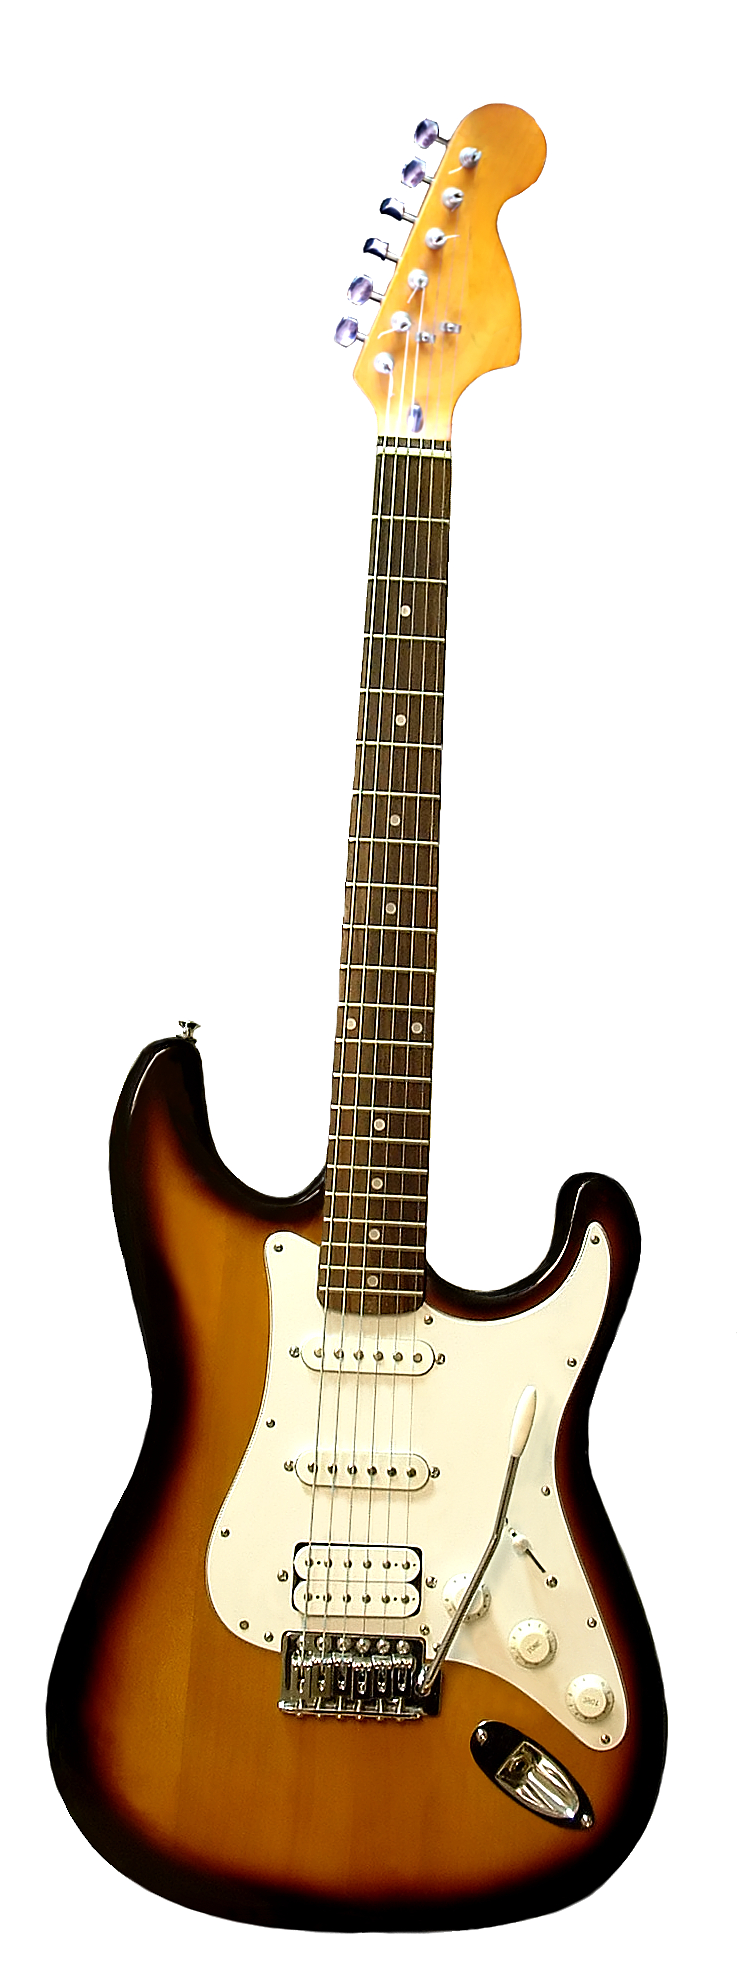 Electric Fender Amplifier Precision Guitar National Bass Clipart